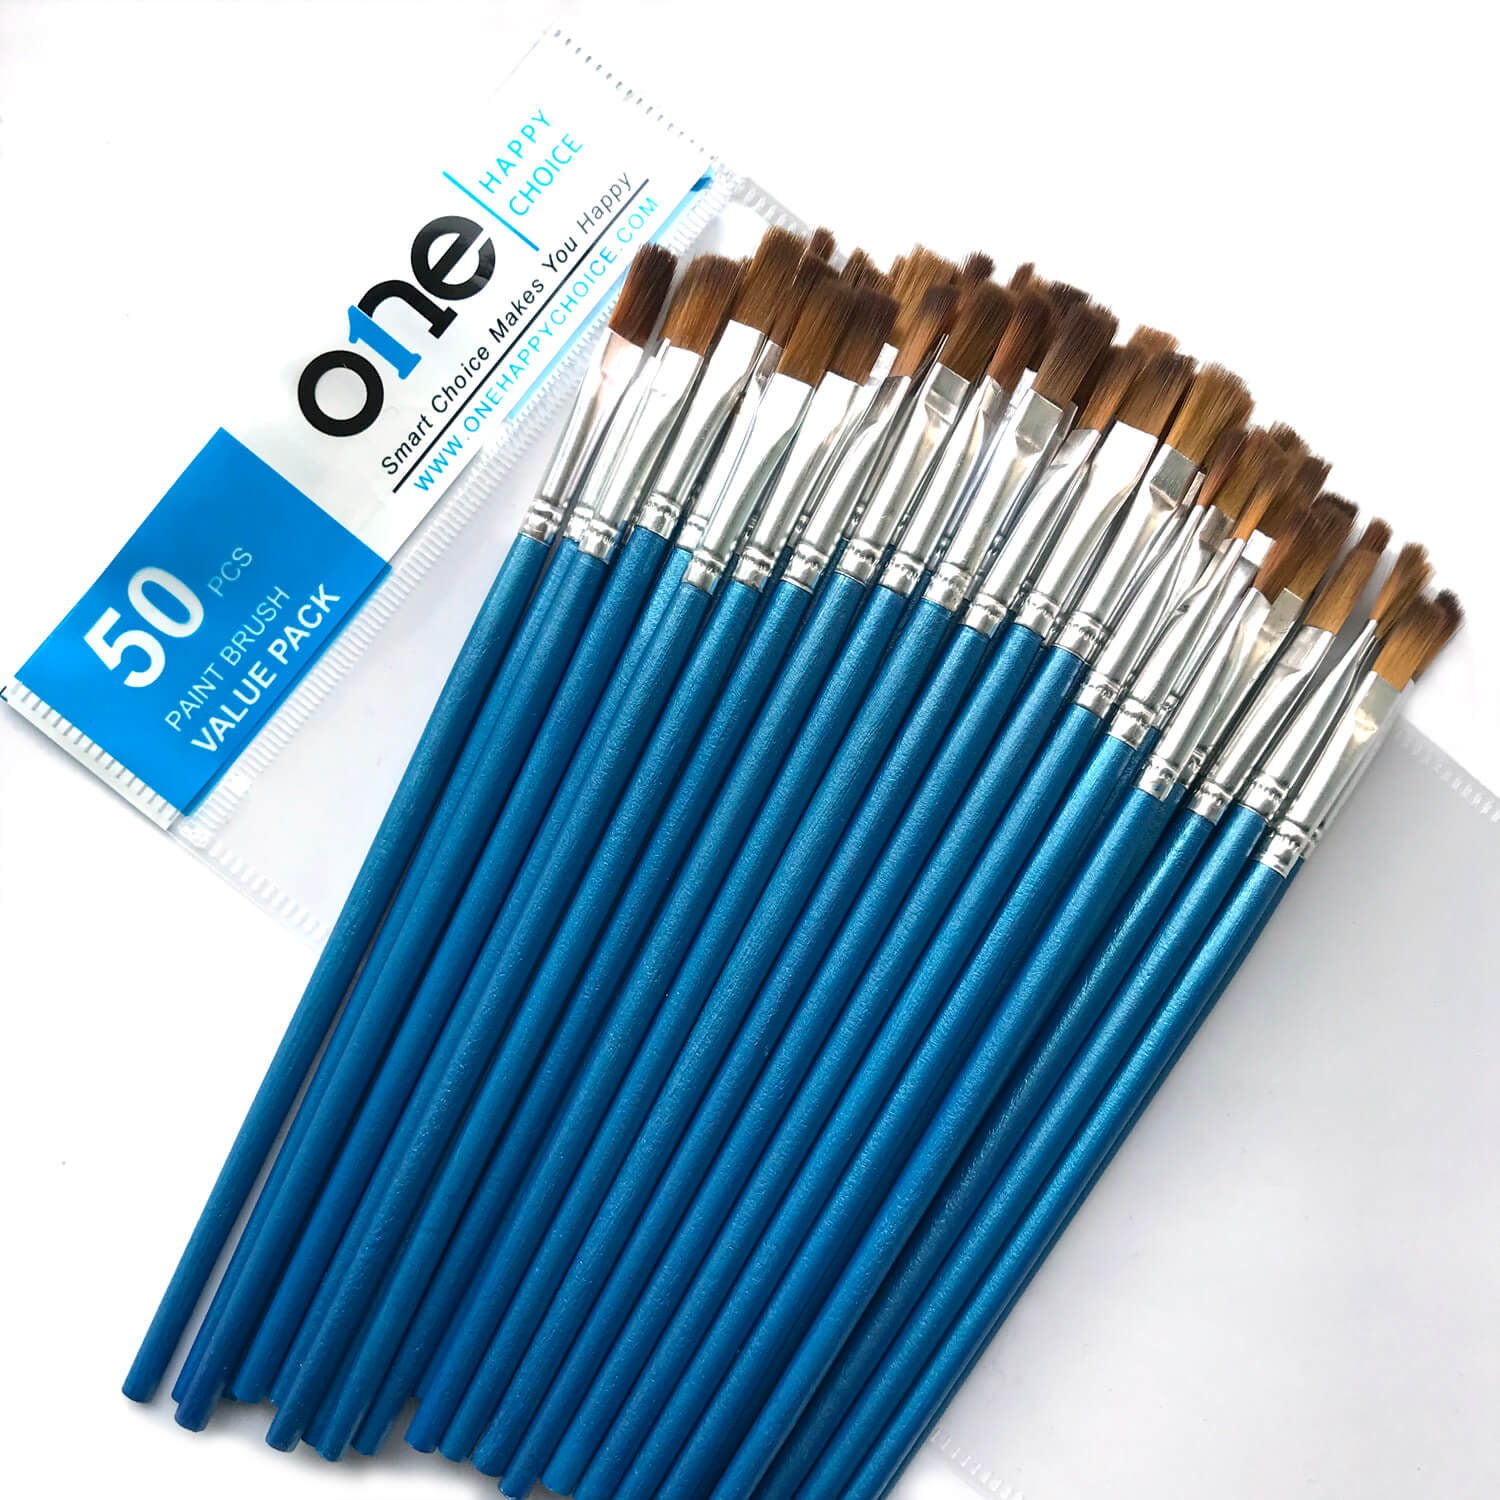 9 Pcs Flat Long Handle Artist Paint Brush Set, Quality Synthetic